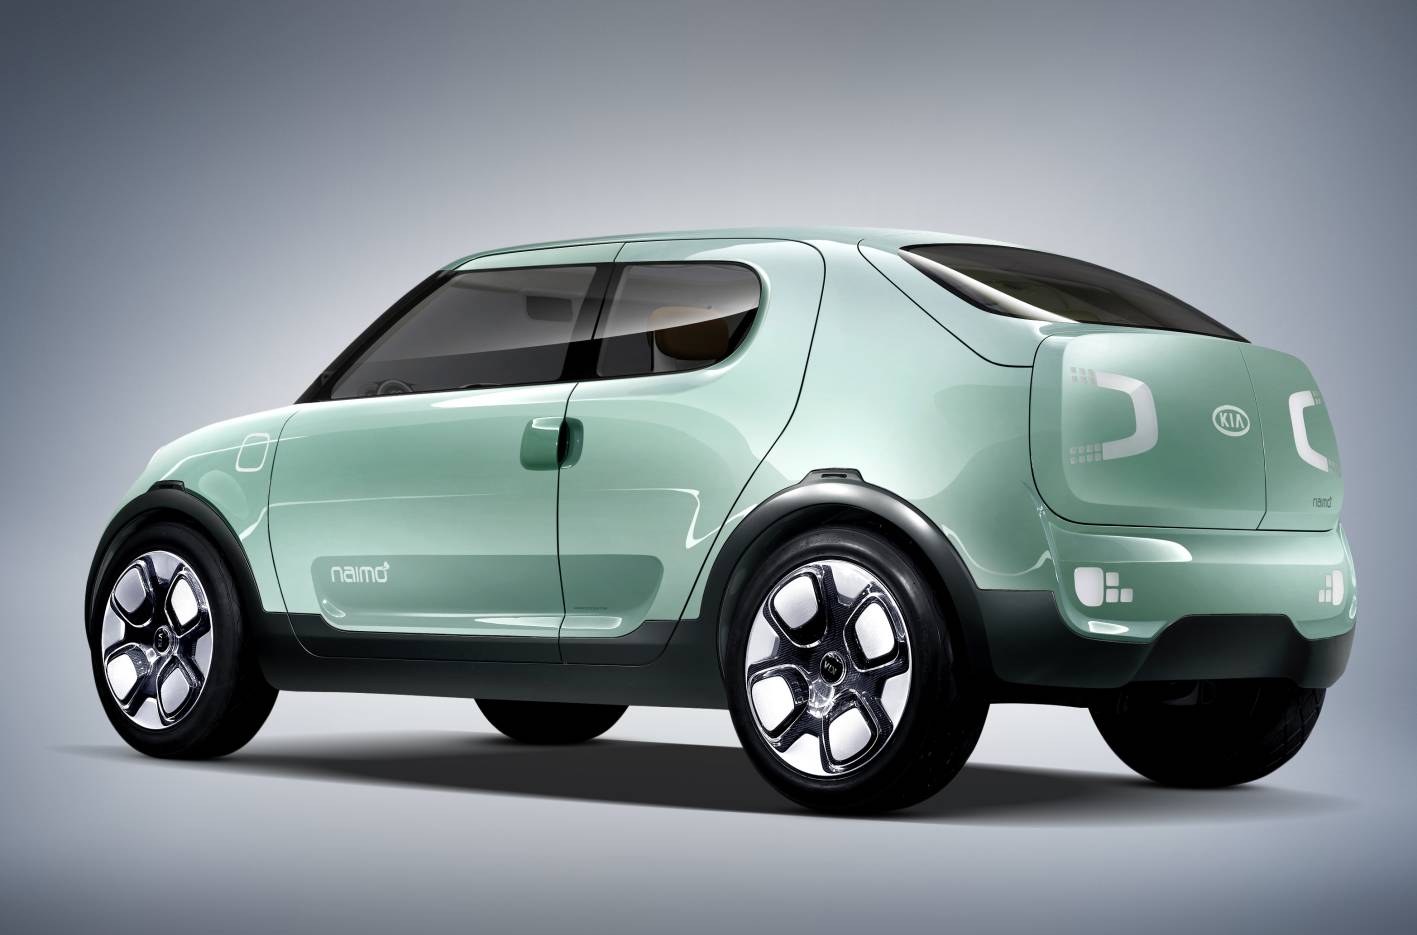 News - Kia’s Naimo Concept Electric Car To Start Testing